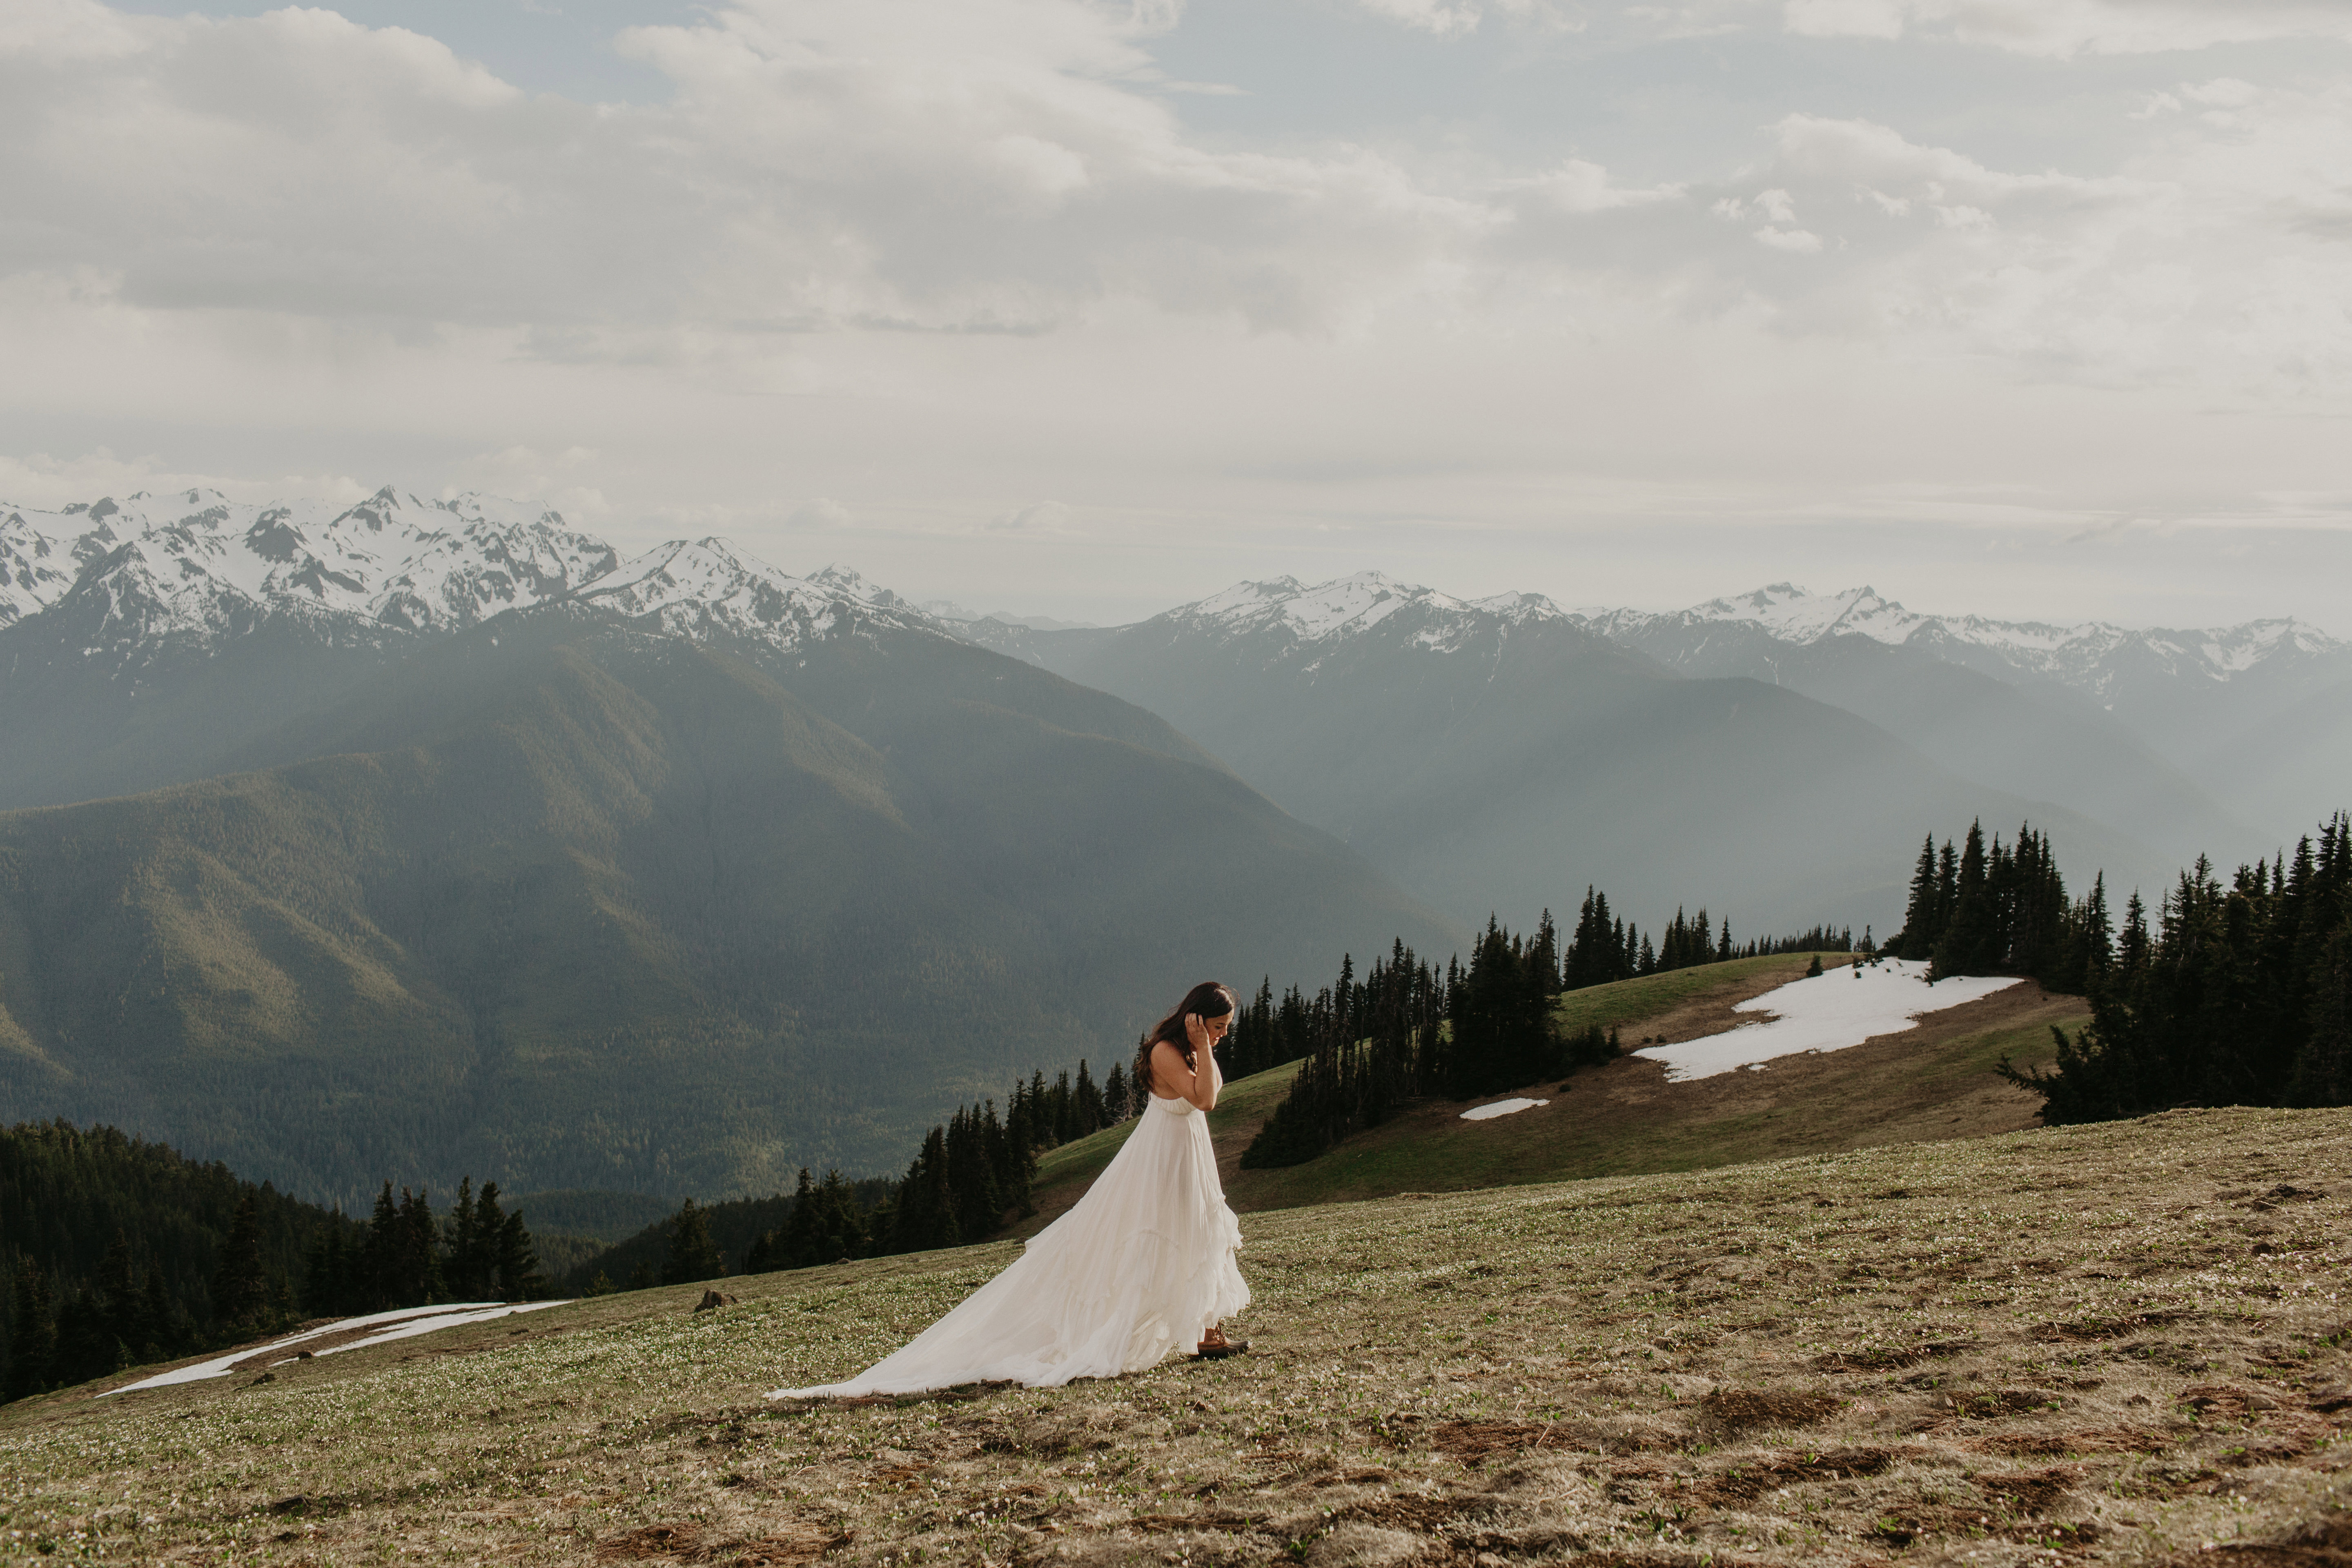 A wild and adventurous wedding at Hurricane Ridge in Olympic National Park by Kadi Tobin